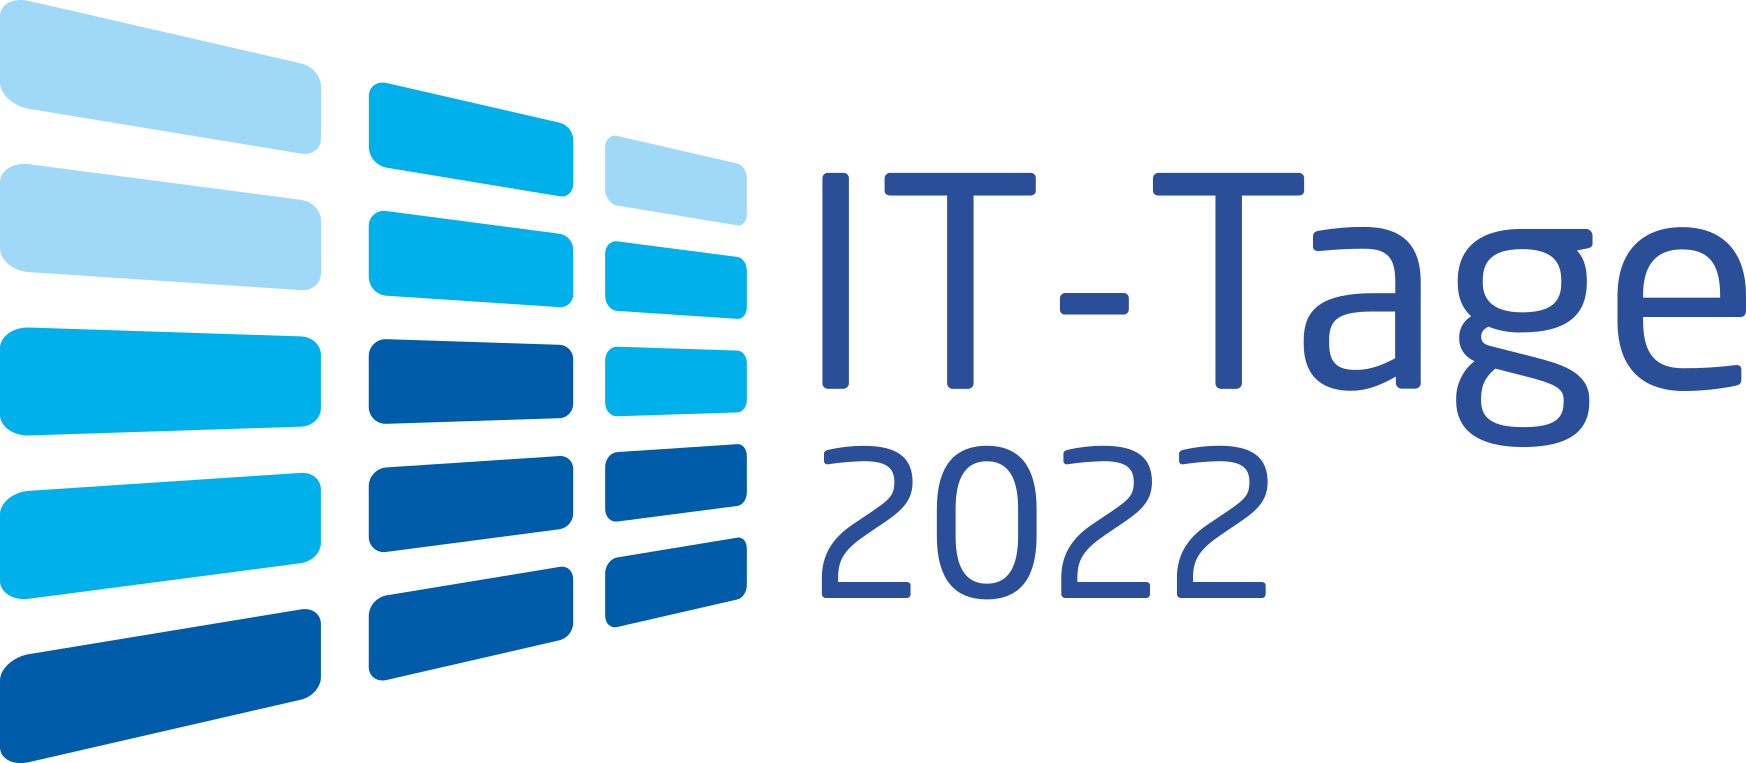 IT-Tage 2022 Logo in blau